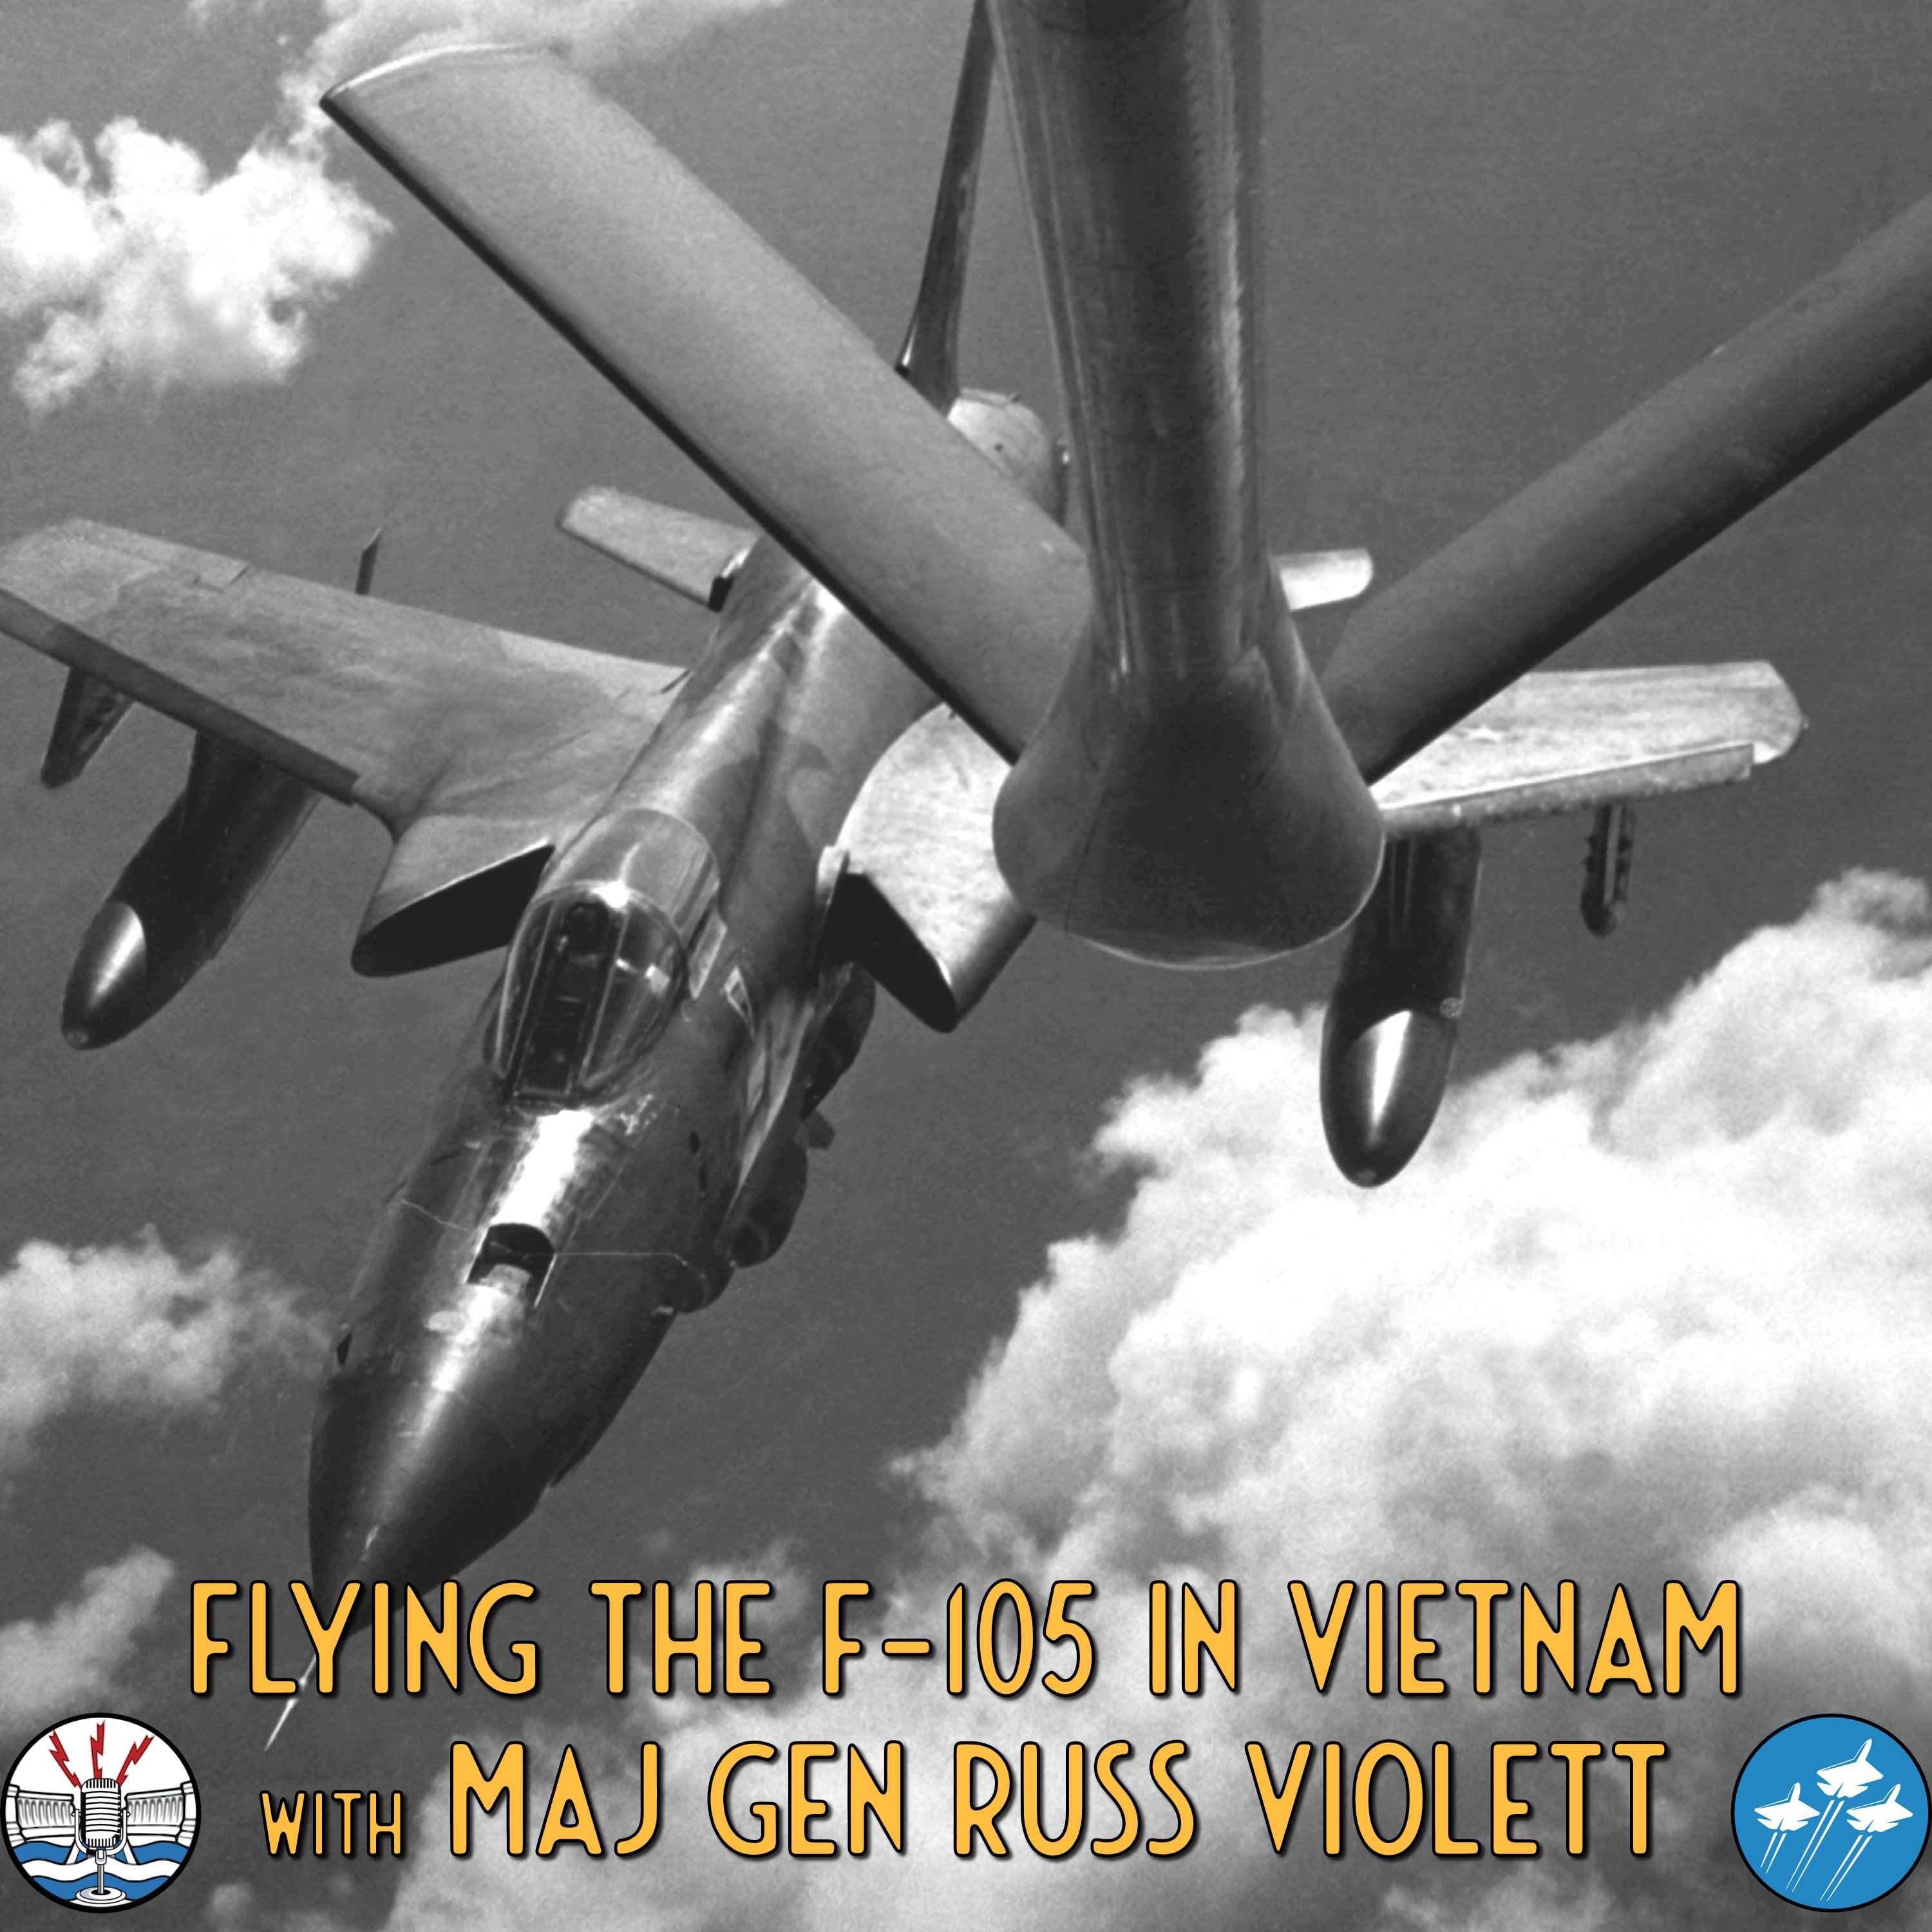 Flying the F-105 in Vietnam with Maj Gen Russ Violett